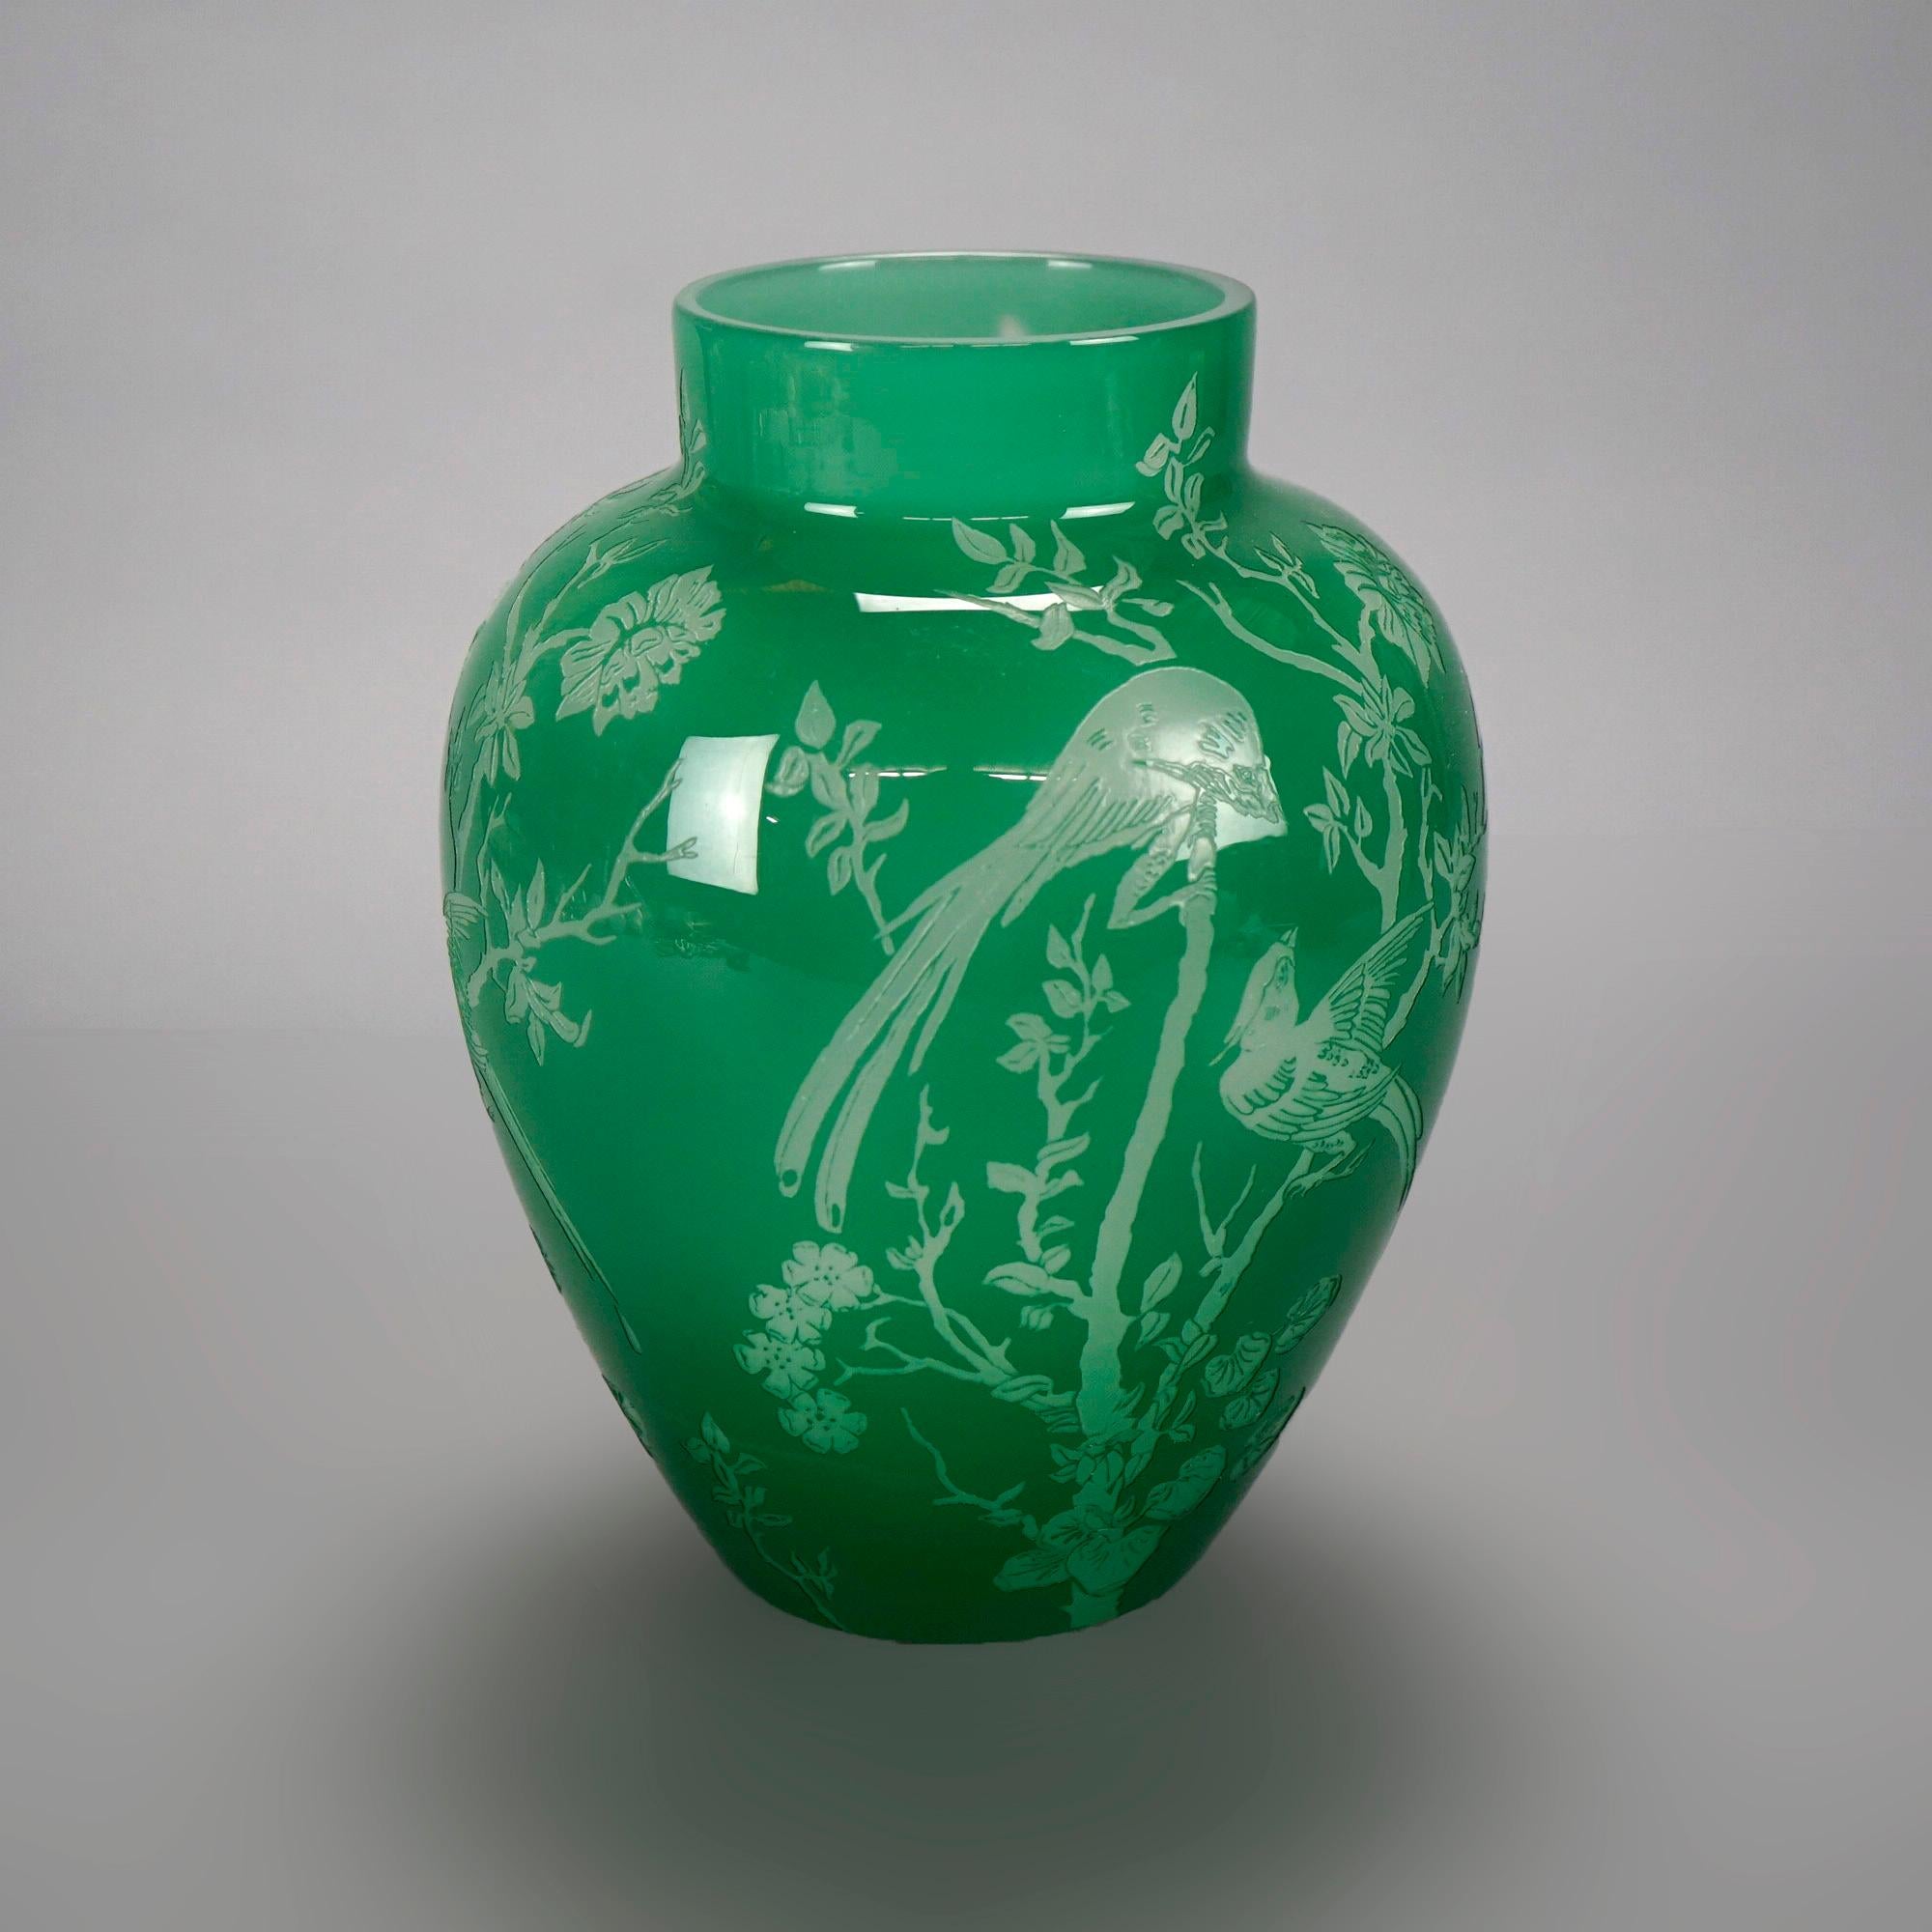 American Antique Steuben Art Glass Jade Green Cutback Asian Bird & Floral Vase, C1930